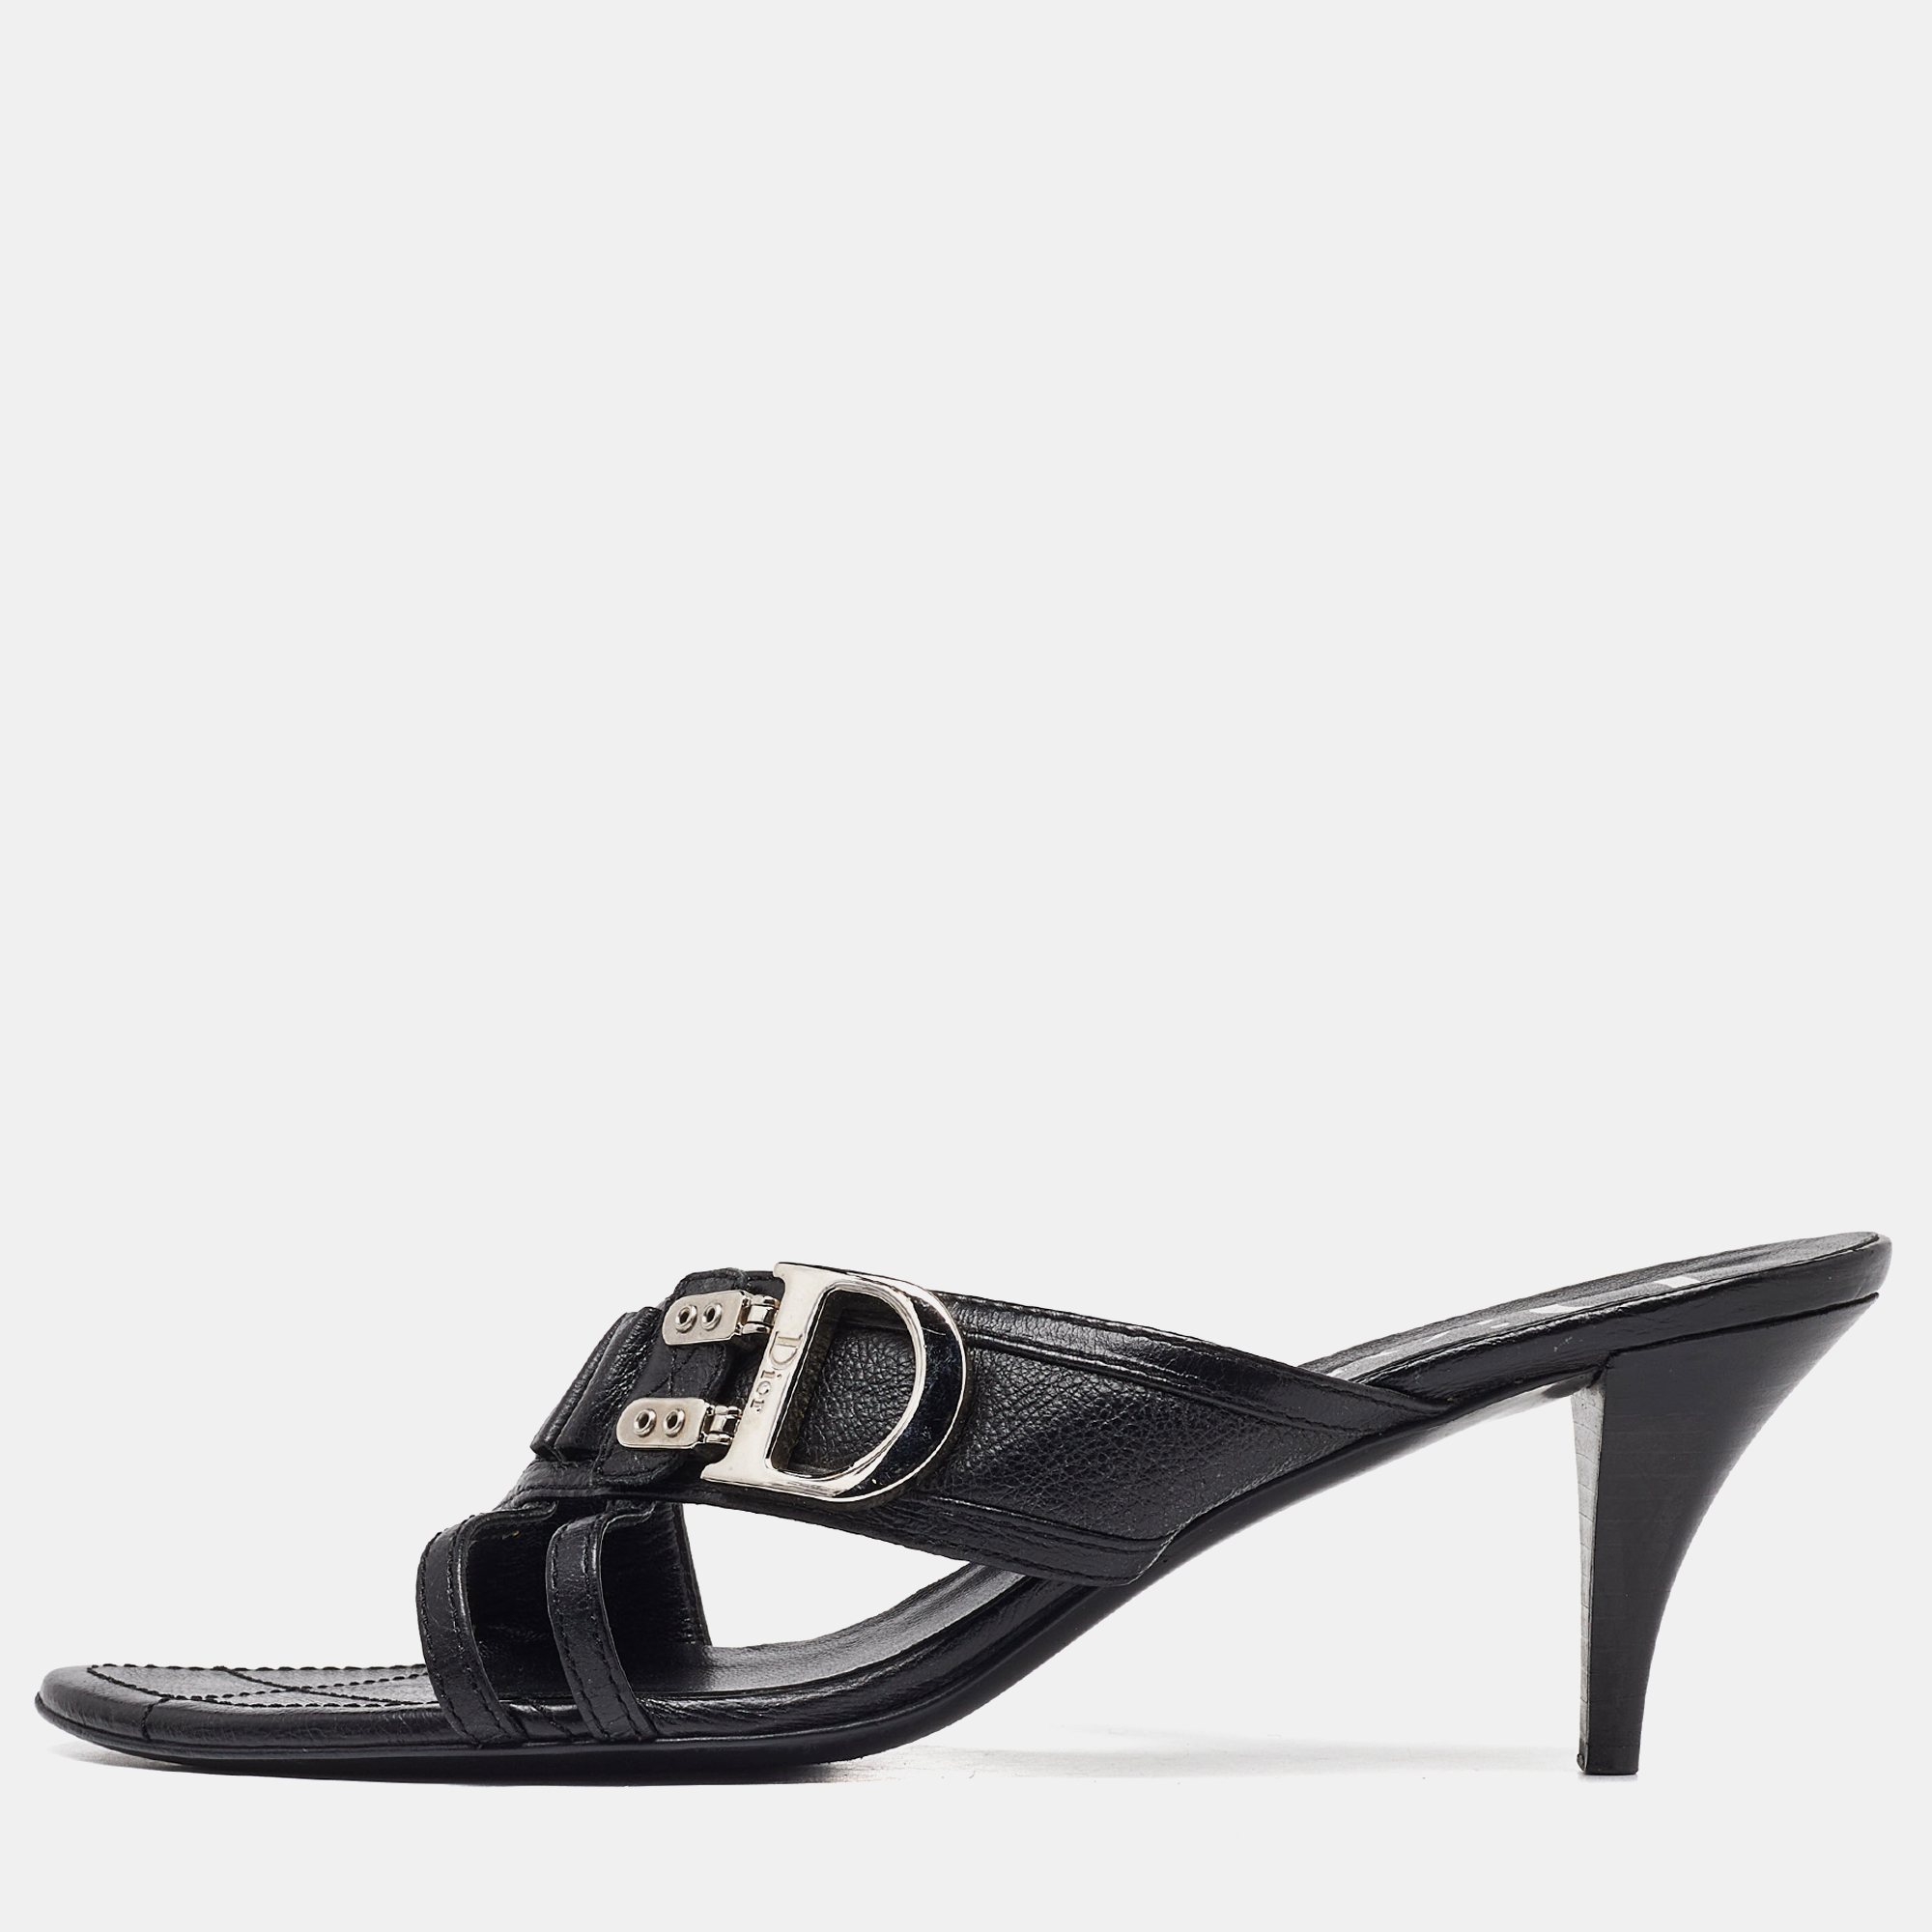 Dior black leather strappy slide sandals size 41